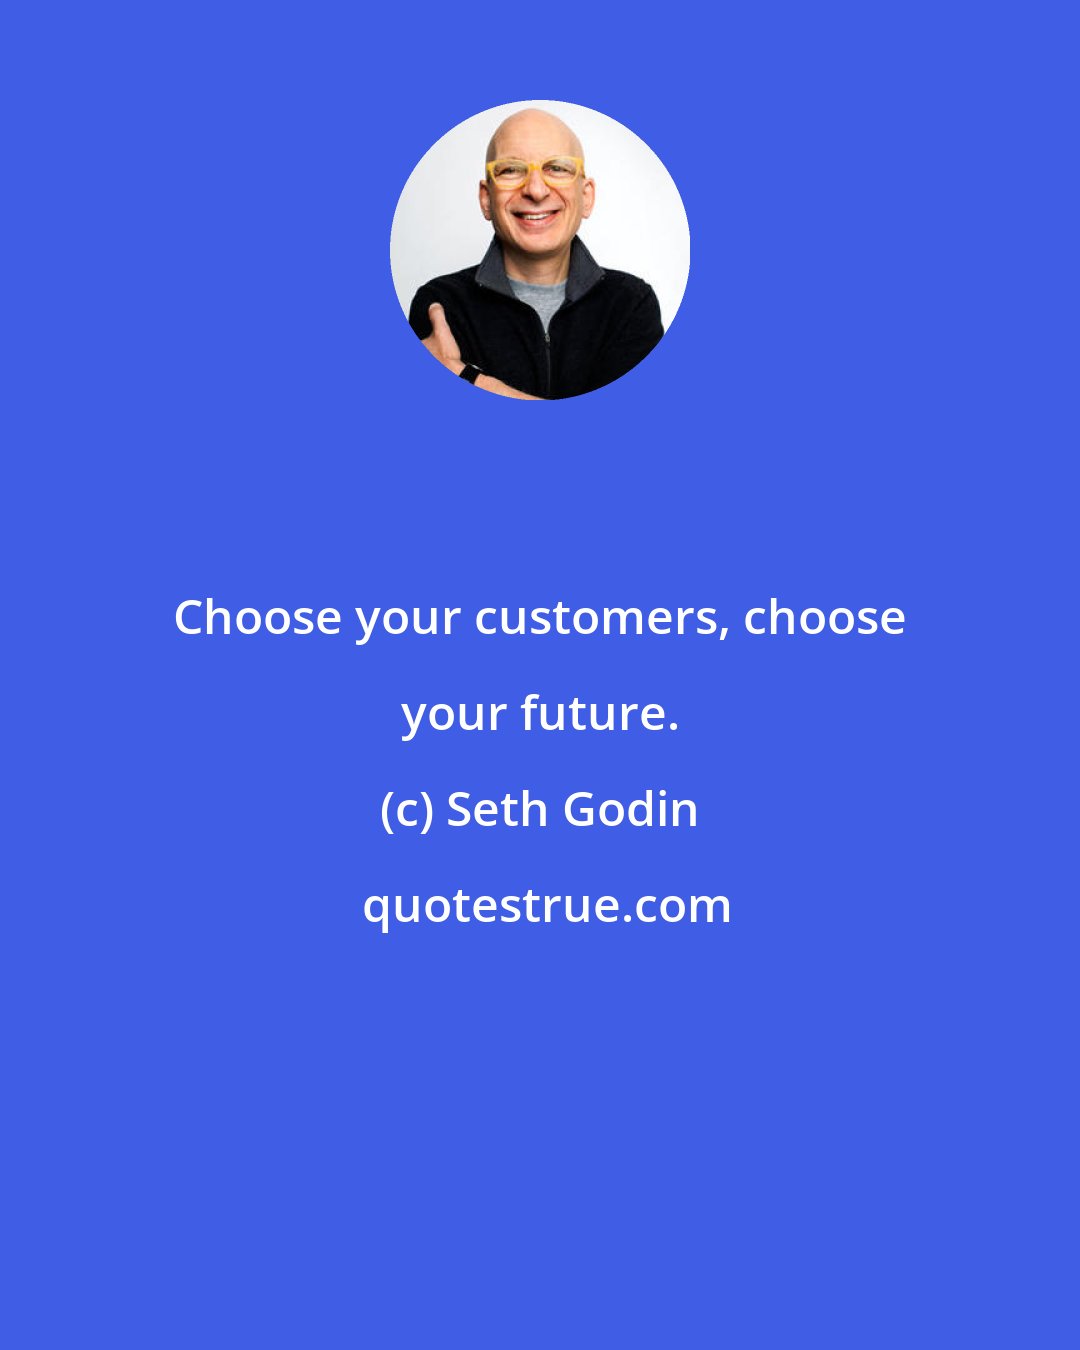 Seth Godin: Choose your customers, choose your future.